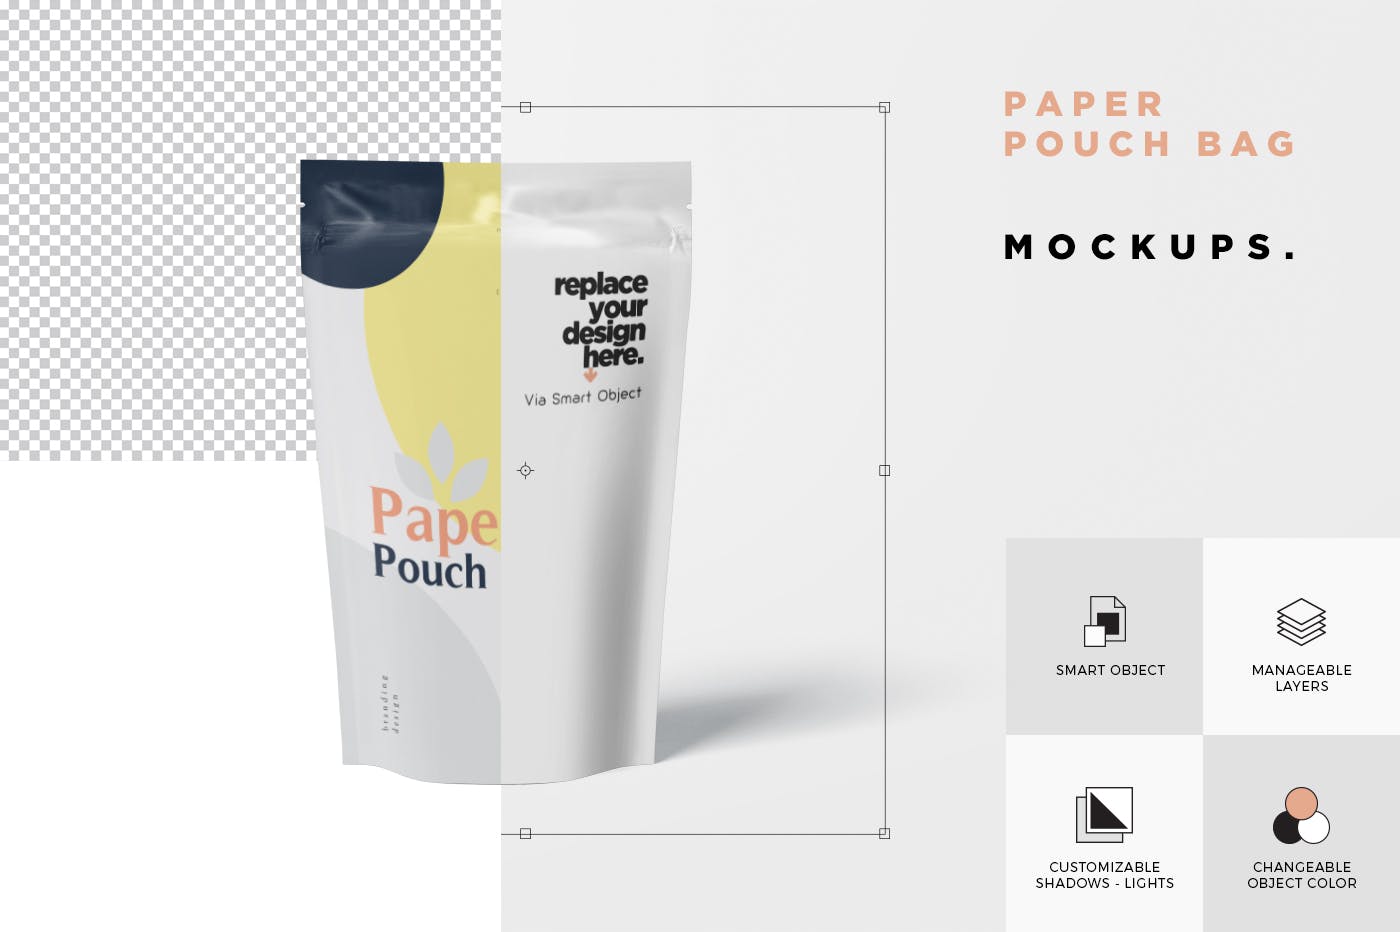 食品自封袋包装设计效果图大洋岛精选 Paper Pouch Bag Mockup – Large Size插图5